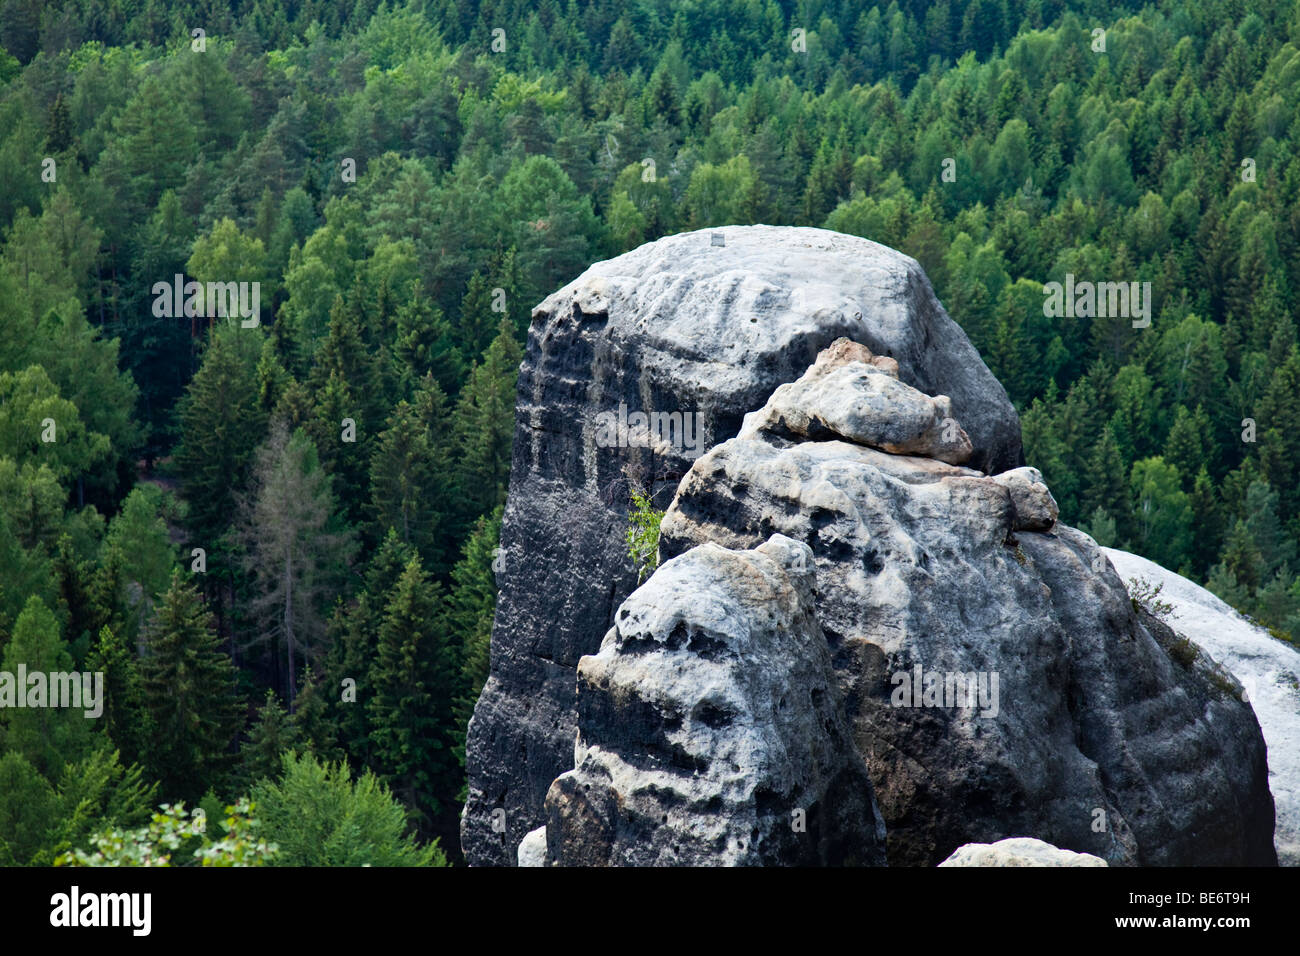 Rock and forest in the national park 'Sächsische Schweiz', Germany Stock Photo